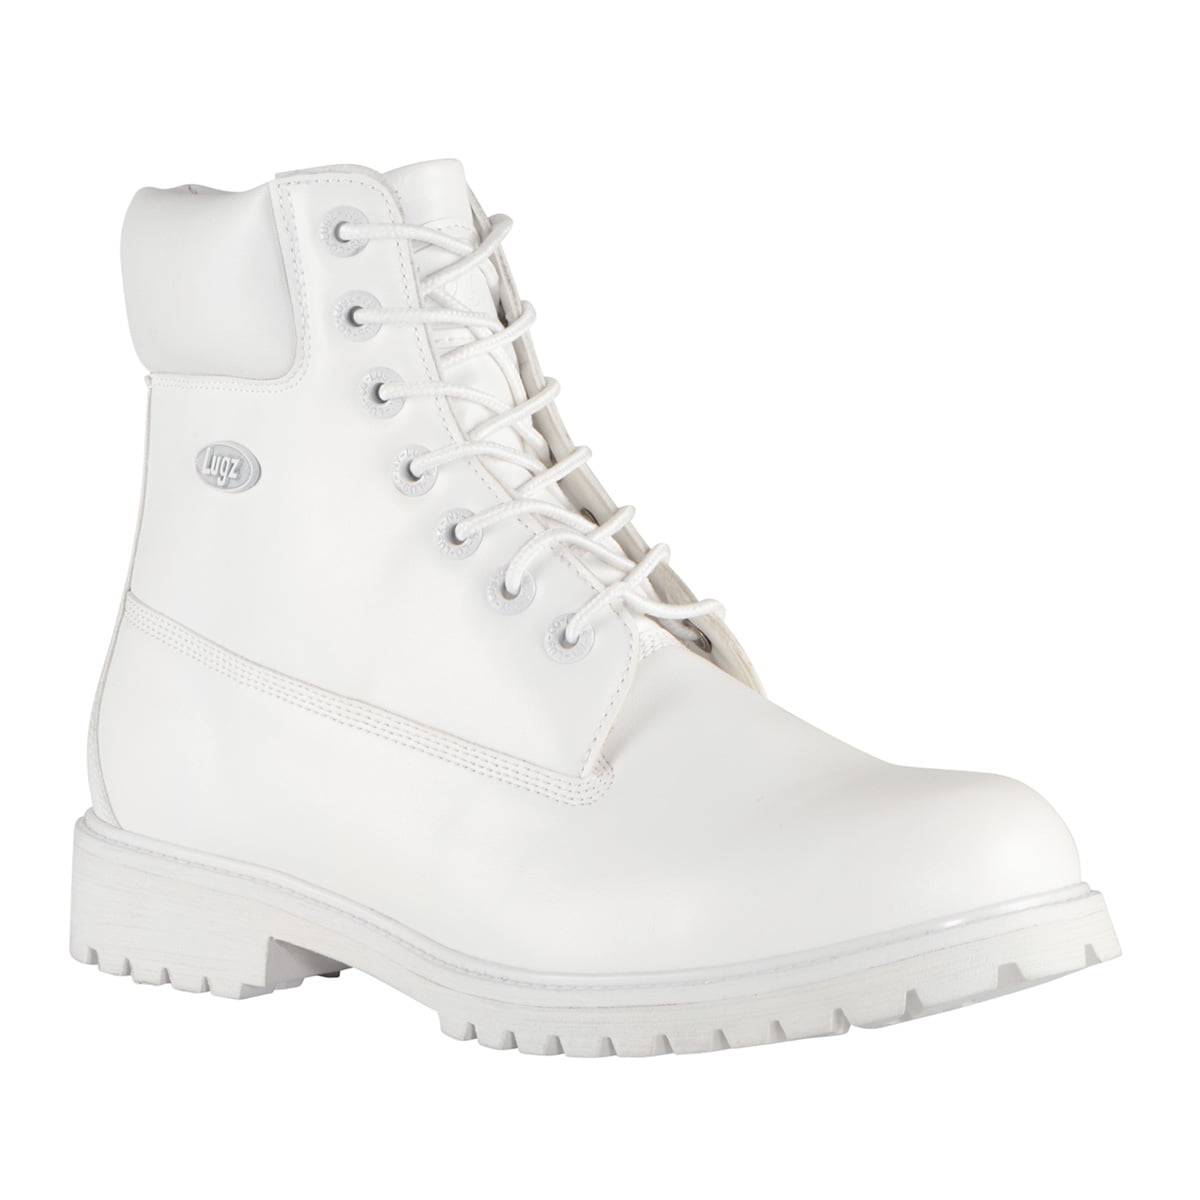 lugz boots white